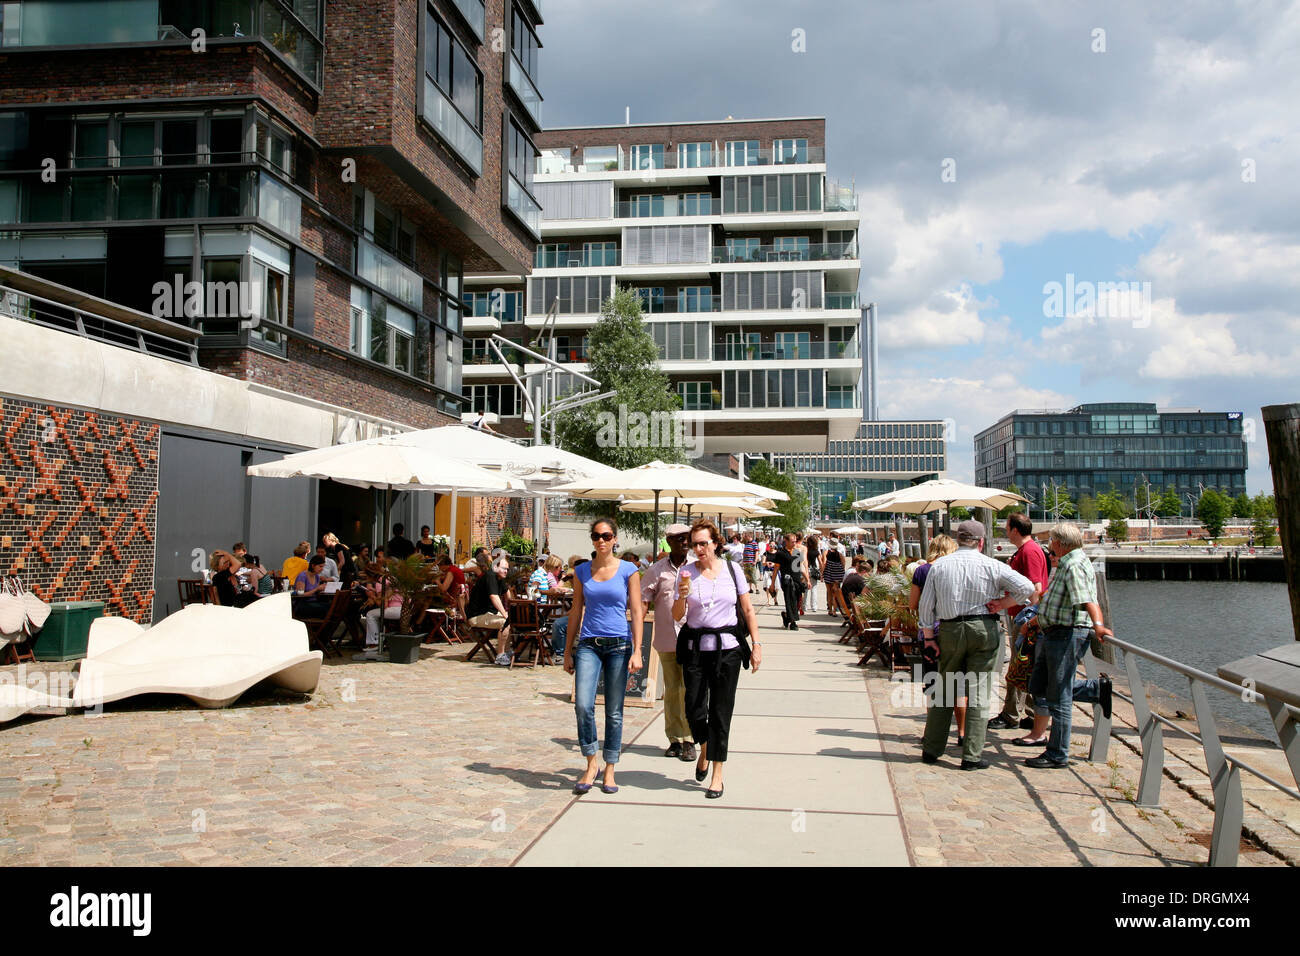 Restaurants am Dalmannkai, Hafencity, Hamburg, Deutschland, Europa Stockfoto